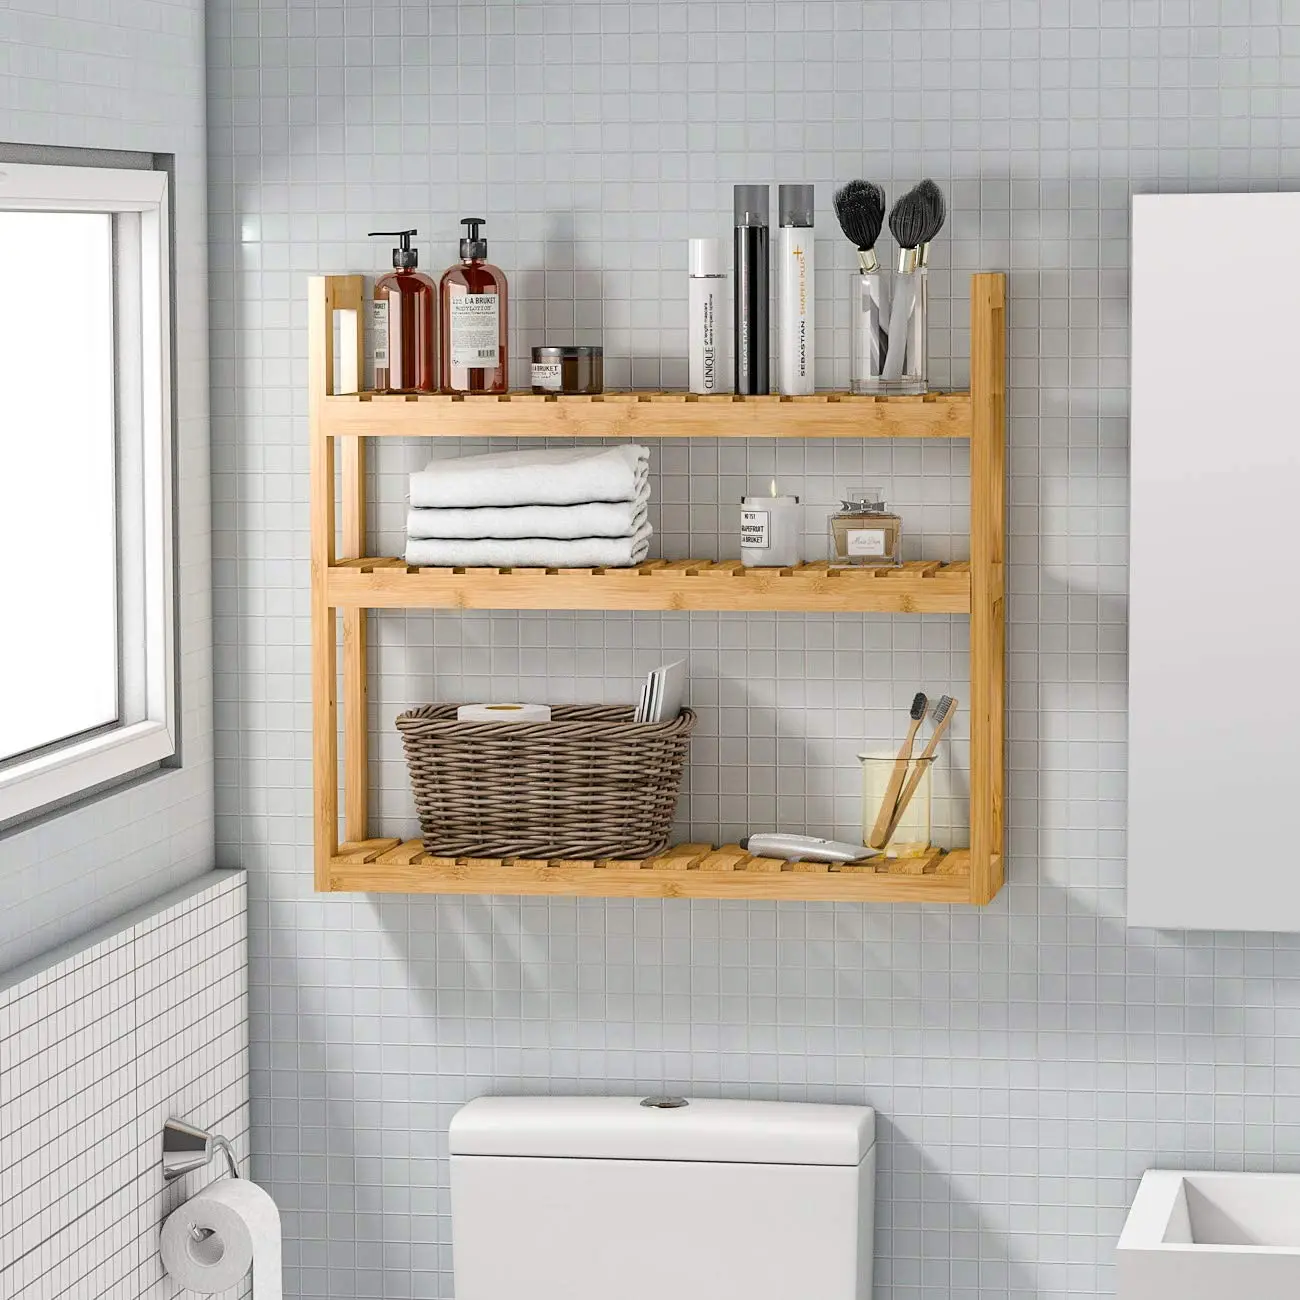 3 Tier Living Room Plant Stand Kitchen Spice Rack Bathroom Adjustable Storage Rack Bamboo Organizer Wall Shelf